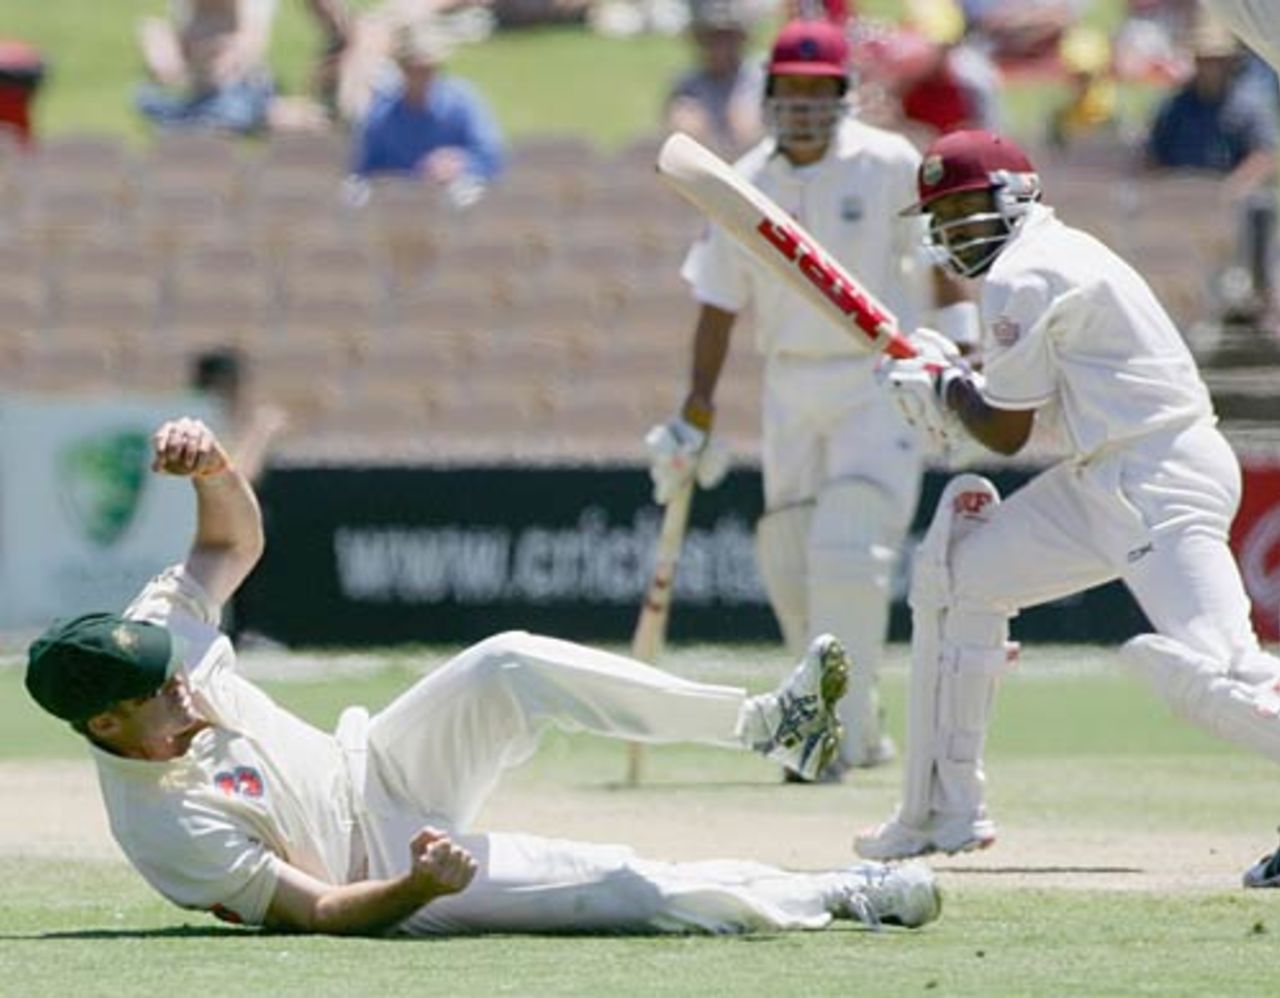 Matthew Hayden hangs on to a blinder to dismiss Brian Lara, Australia v West Indies, 3rd Test, Adelaide, 4th day, November 28, 2005